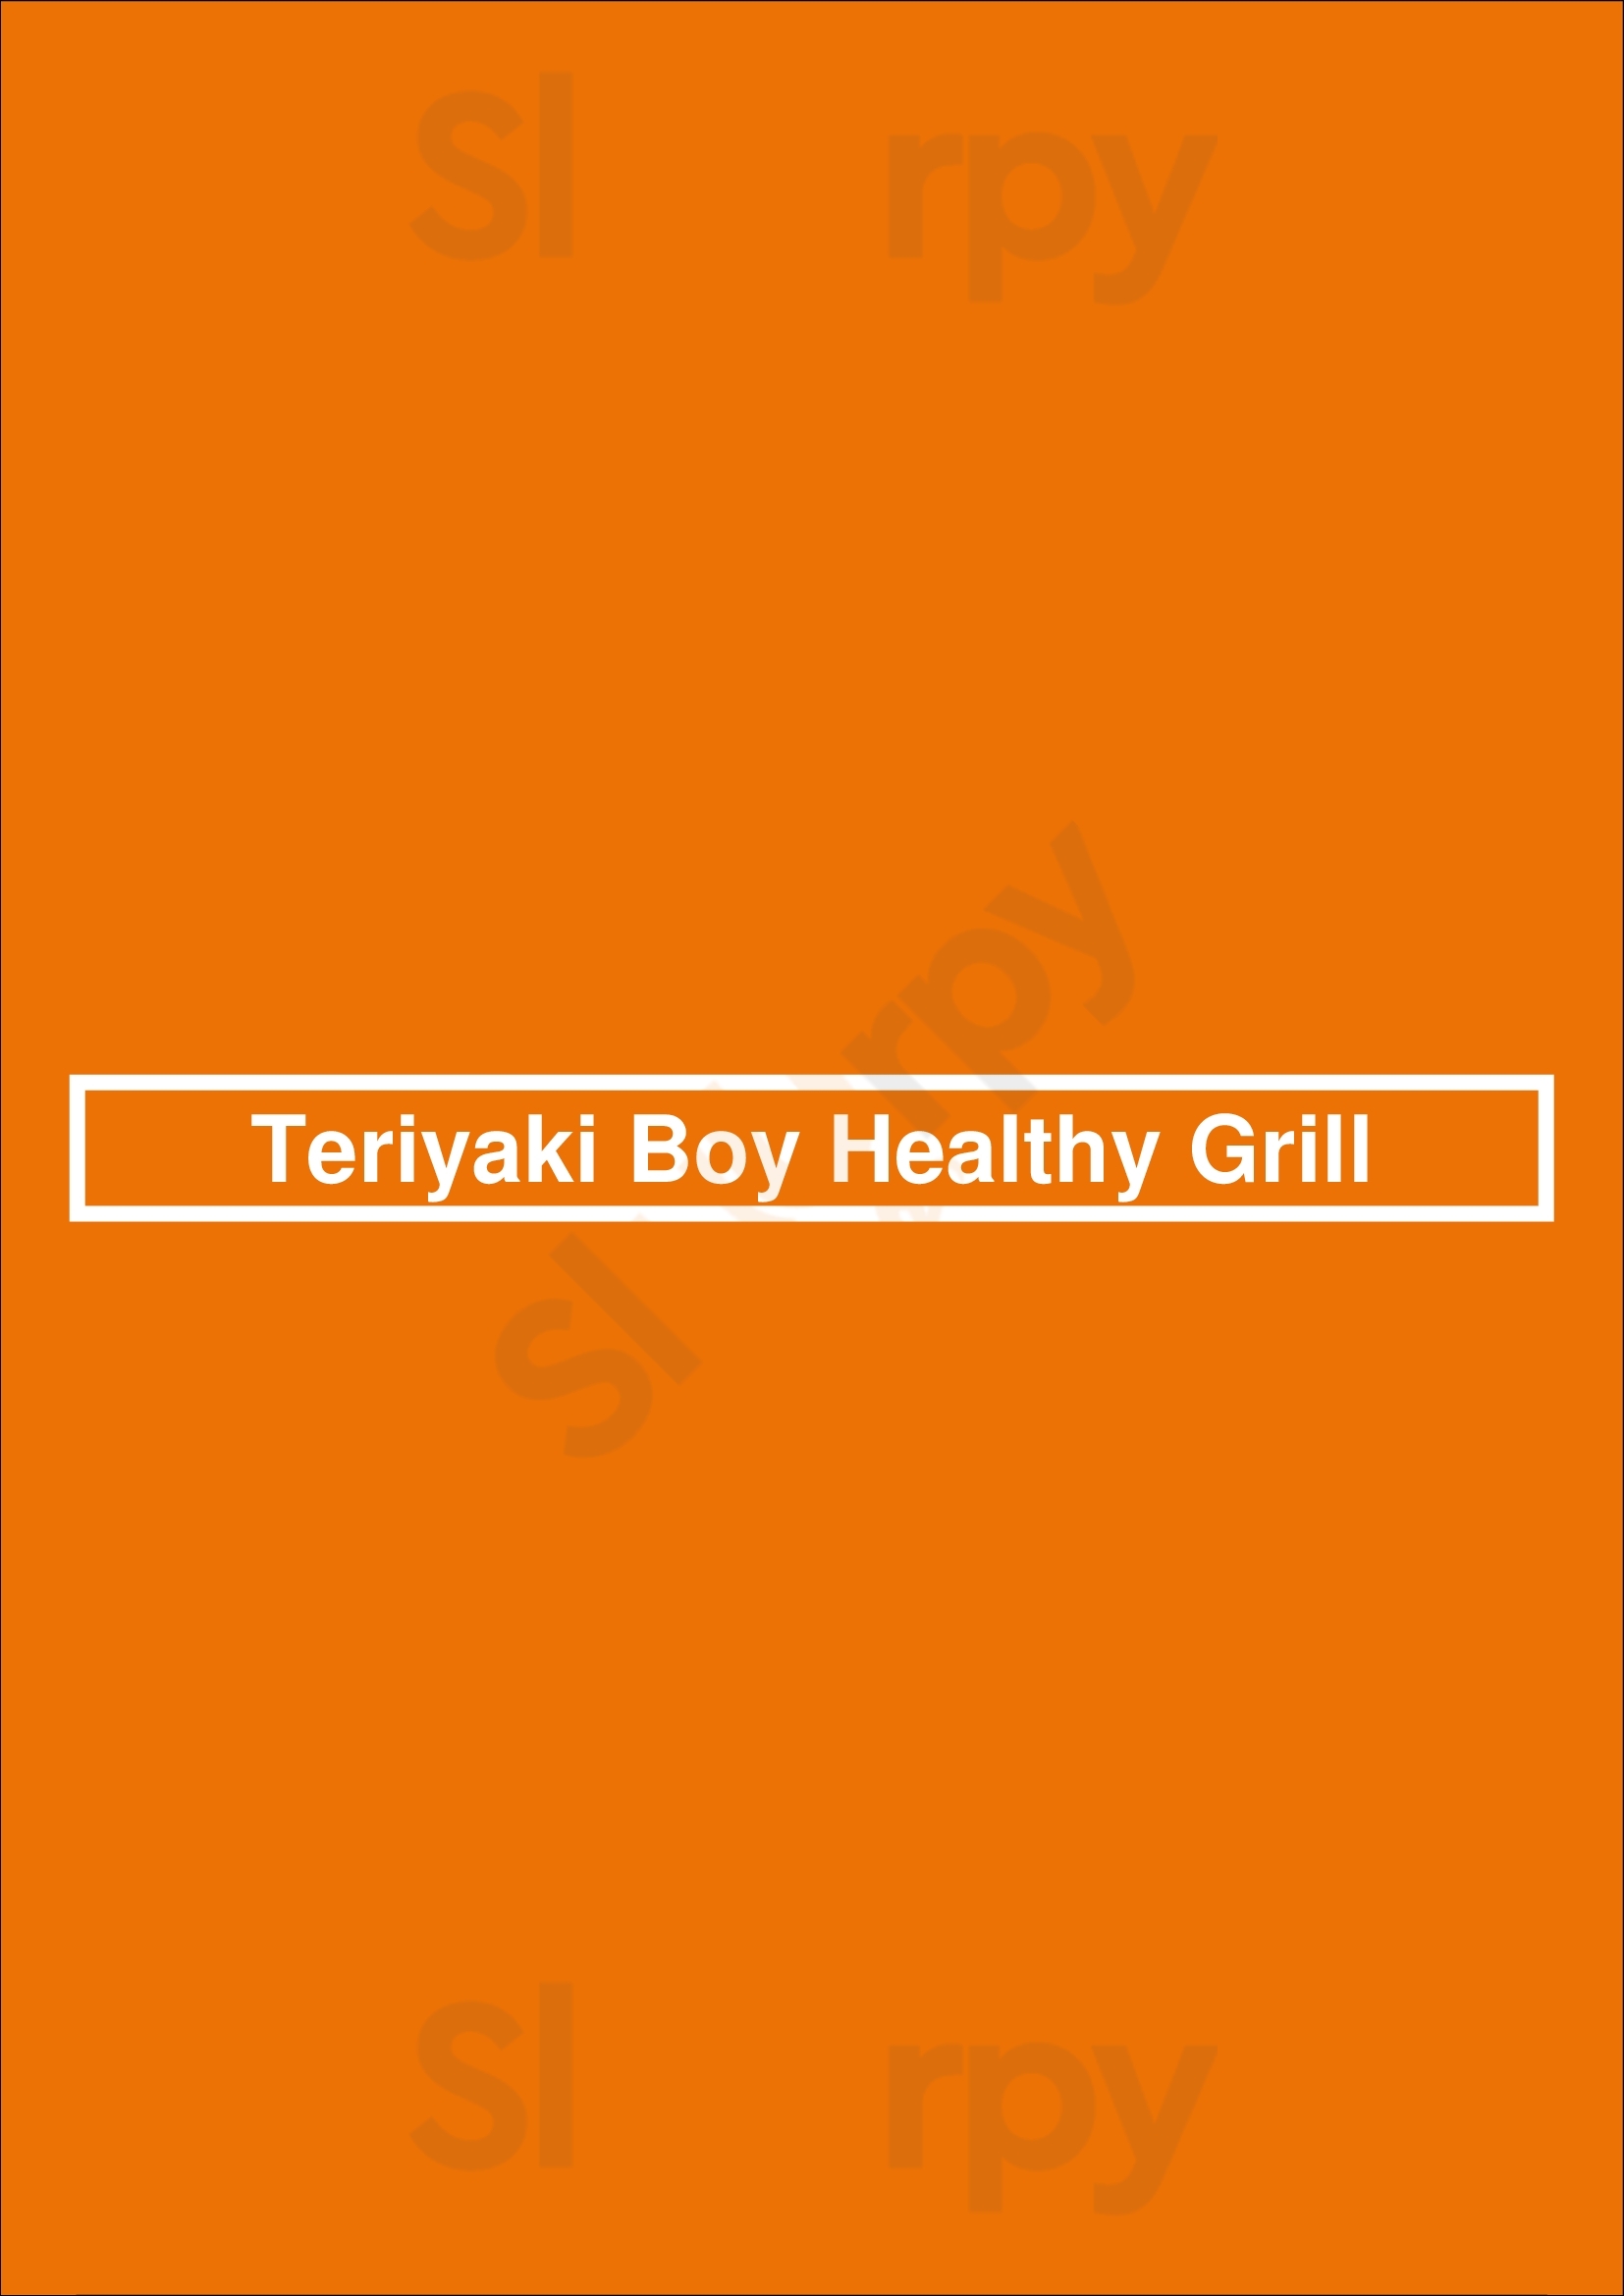 Teriyaki Boy Healthy Grill Las Vegas Menu - 1